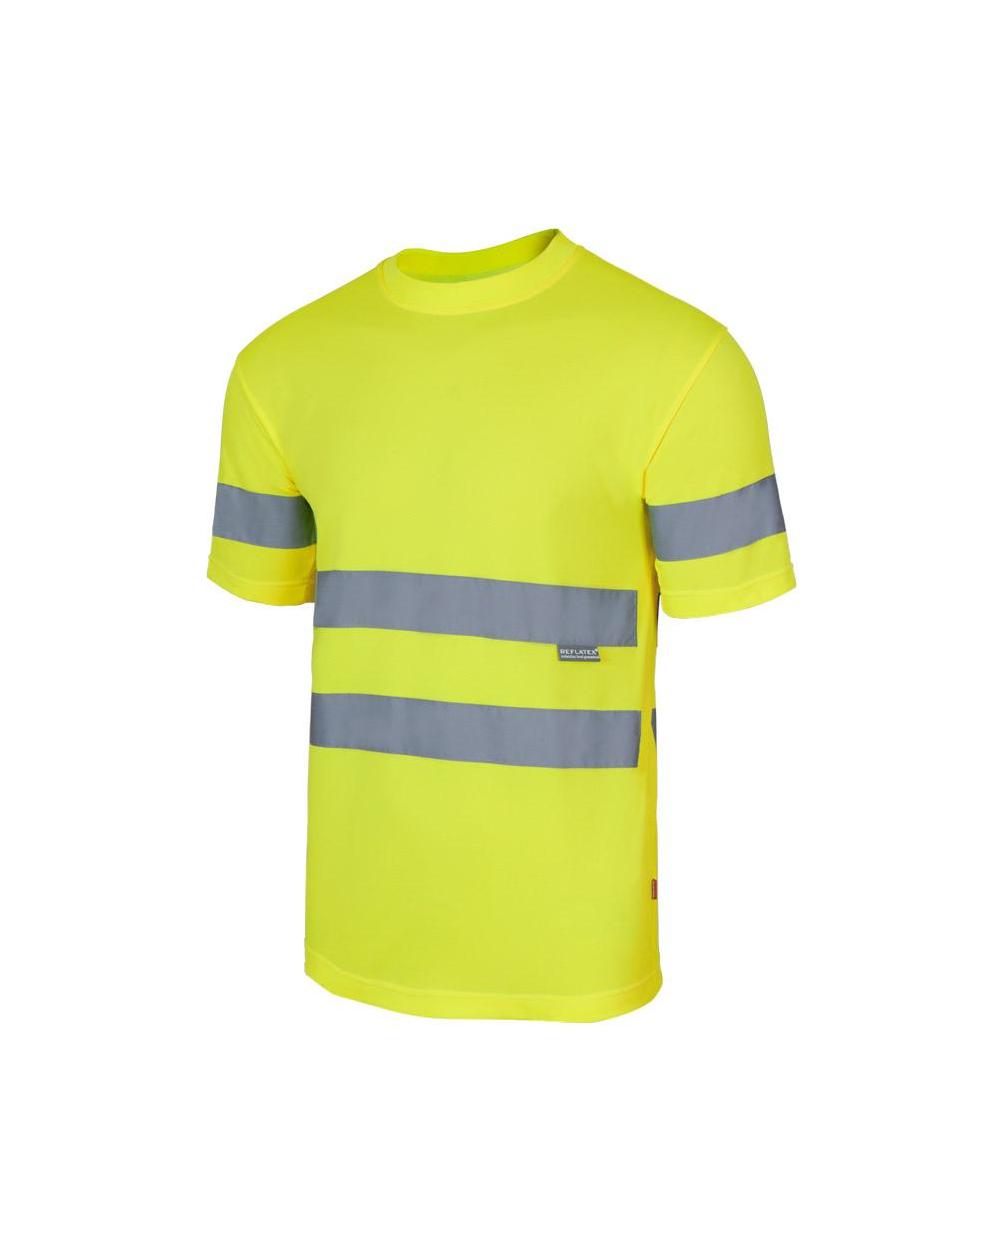 Comprar Camiseta tecnica alta visibilidad serie 305505 online barato Amarillo Fluor